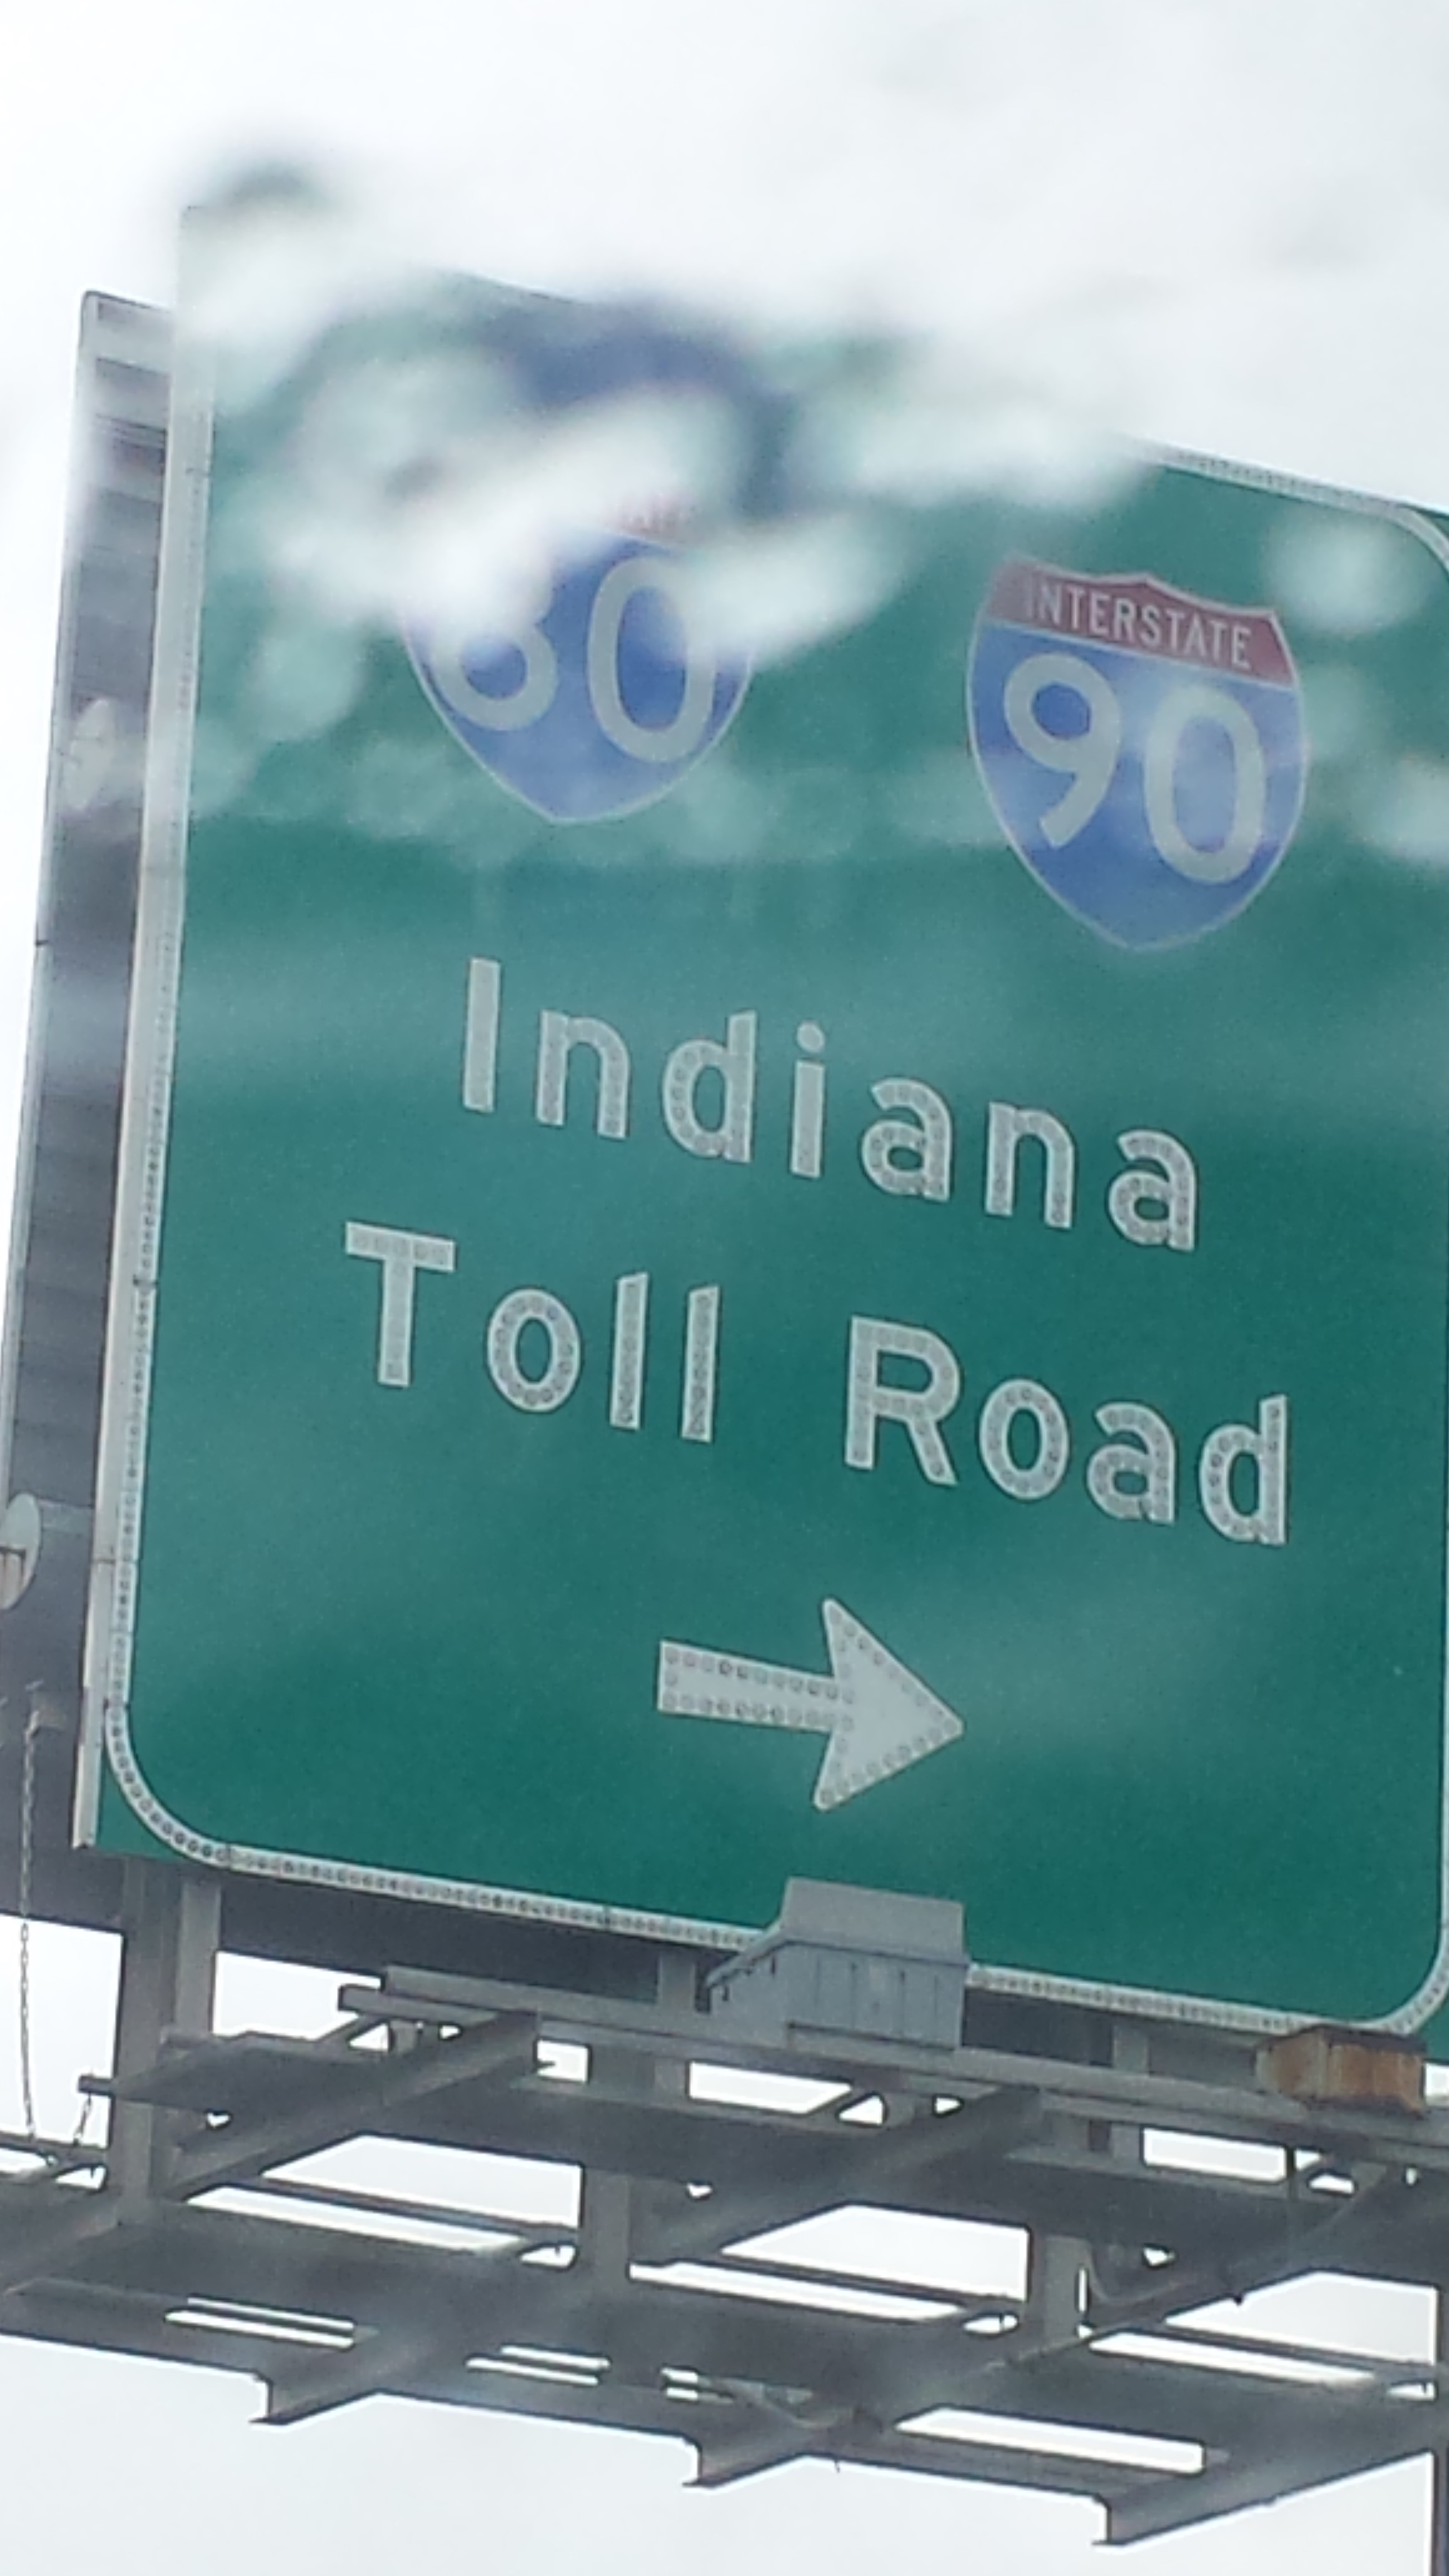 Indiana toll road.jpg